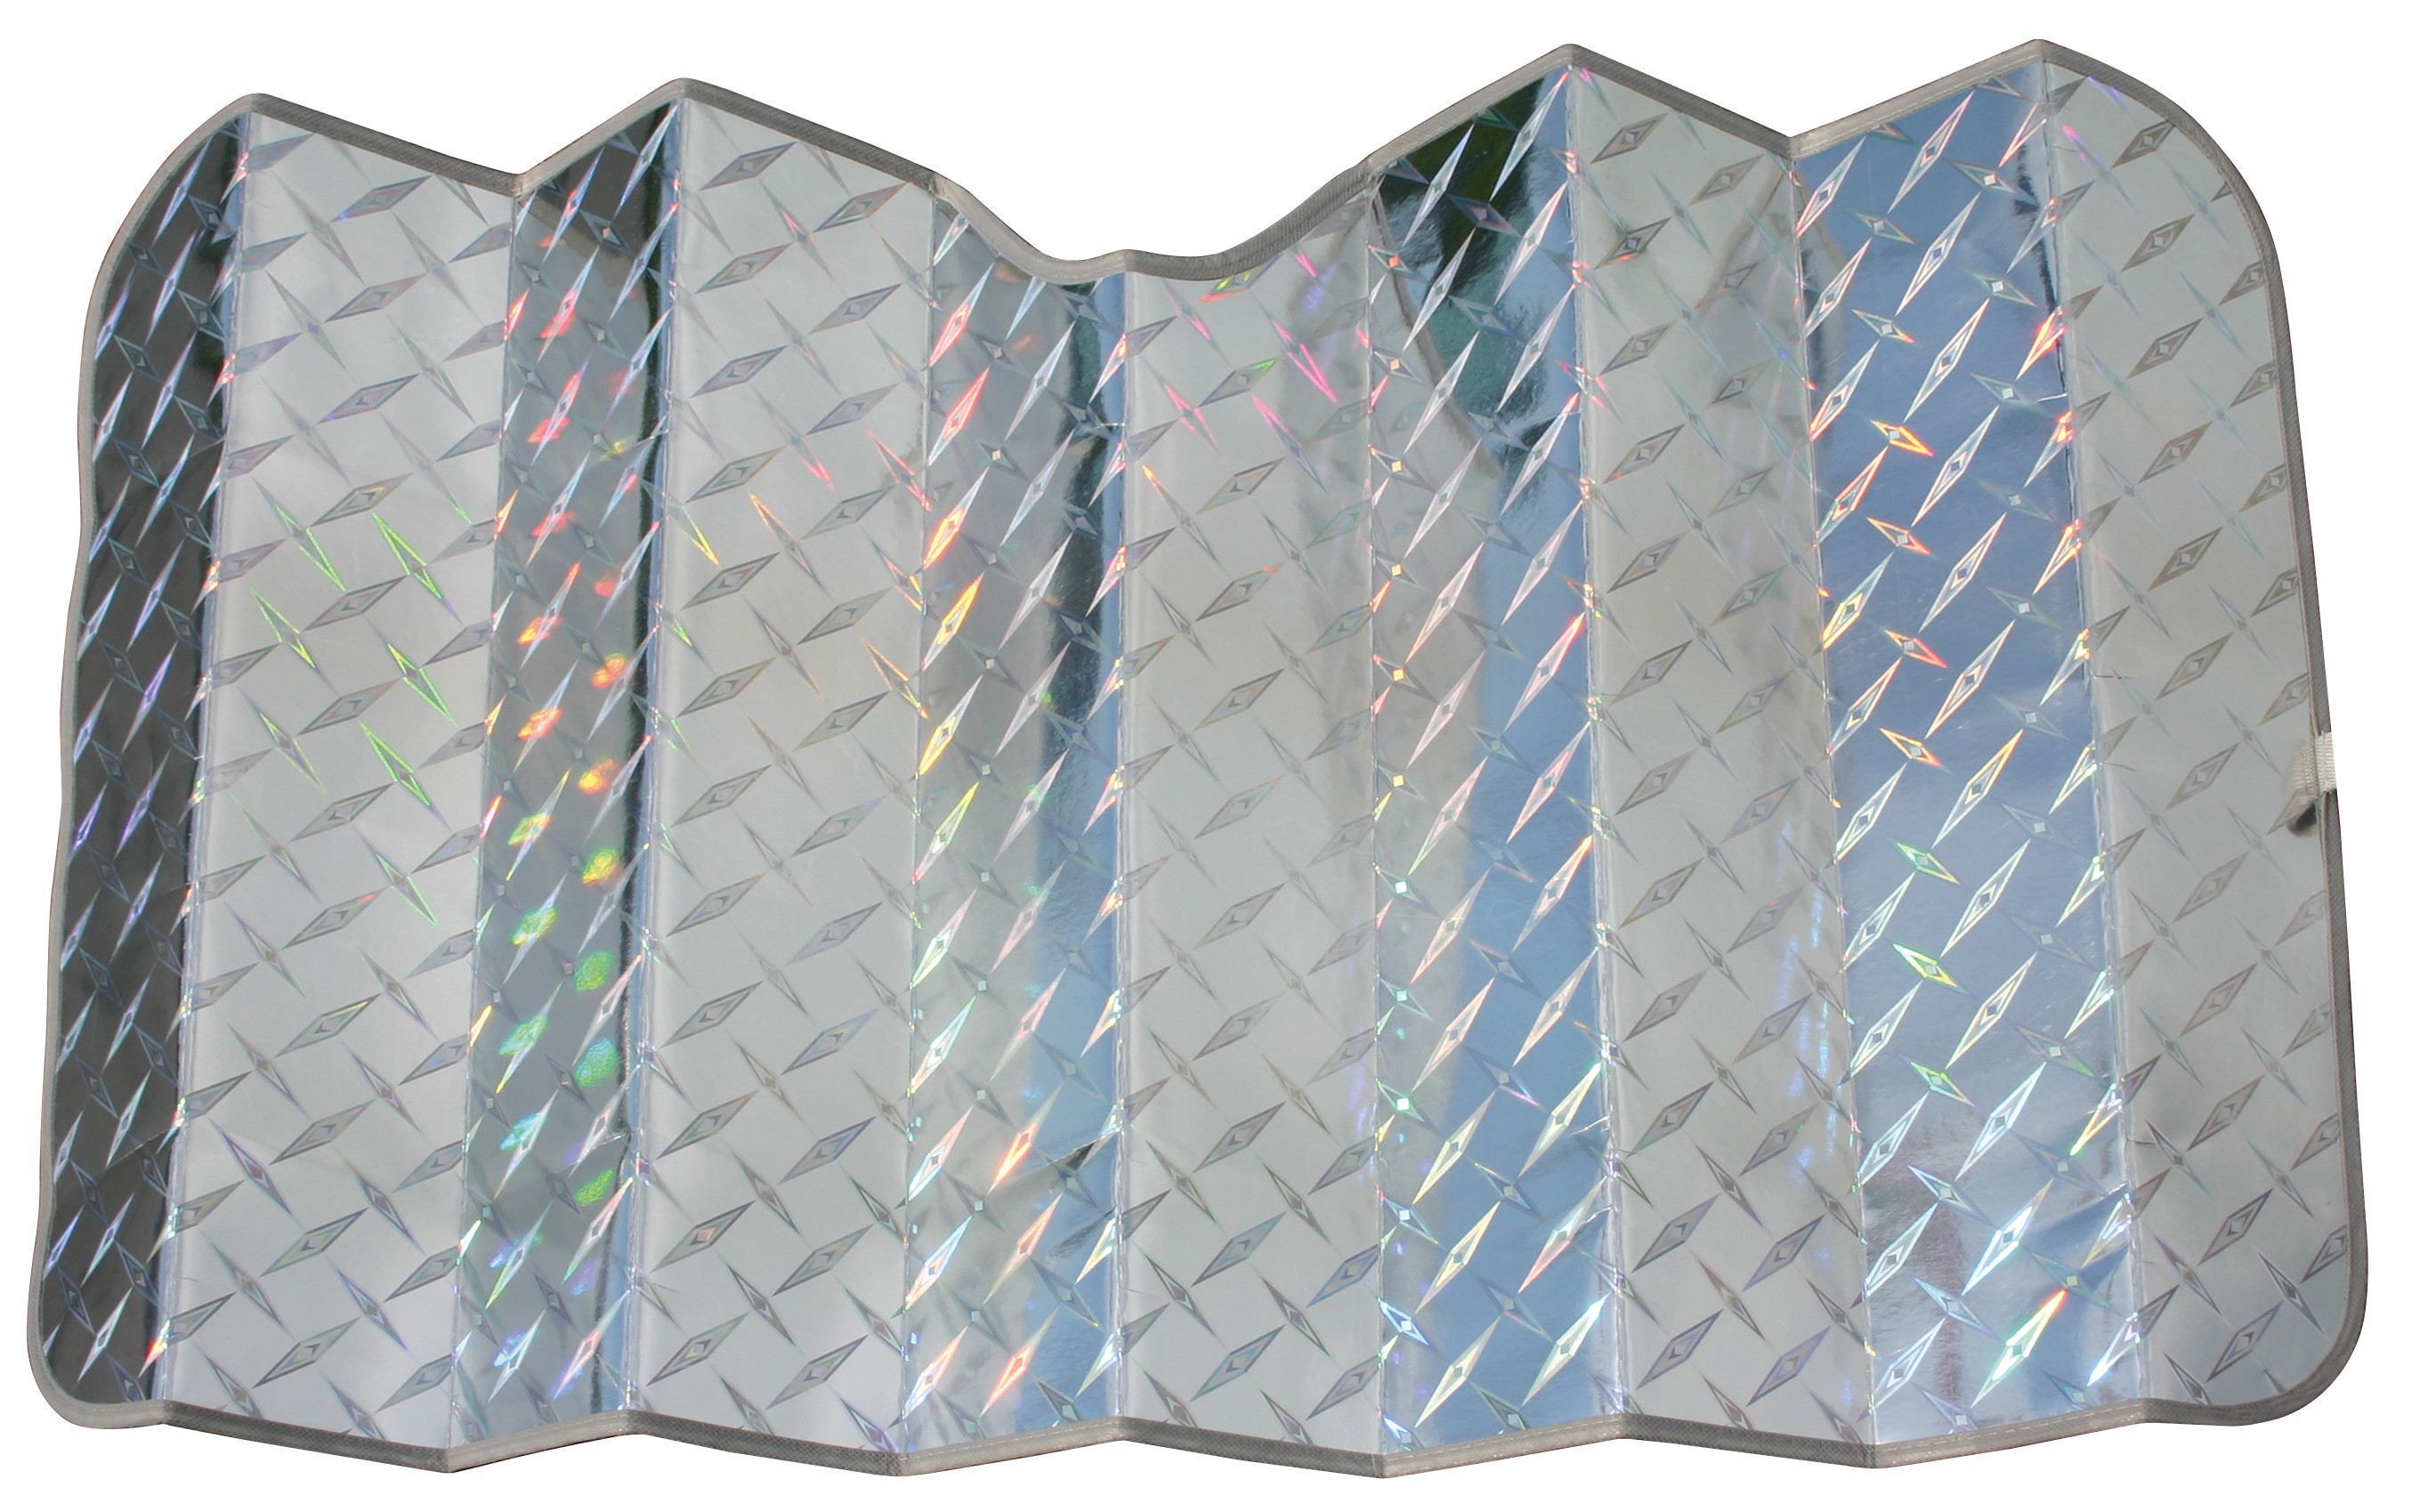 Parasolar fata Diamant - Reflex - 80x140cm - L Garage AutoRide